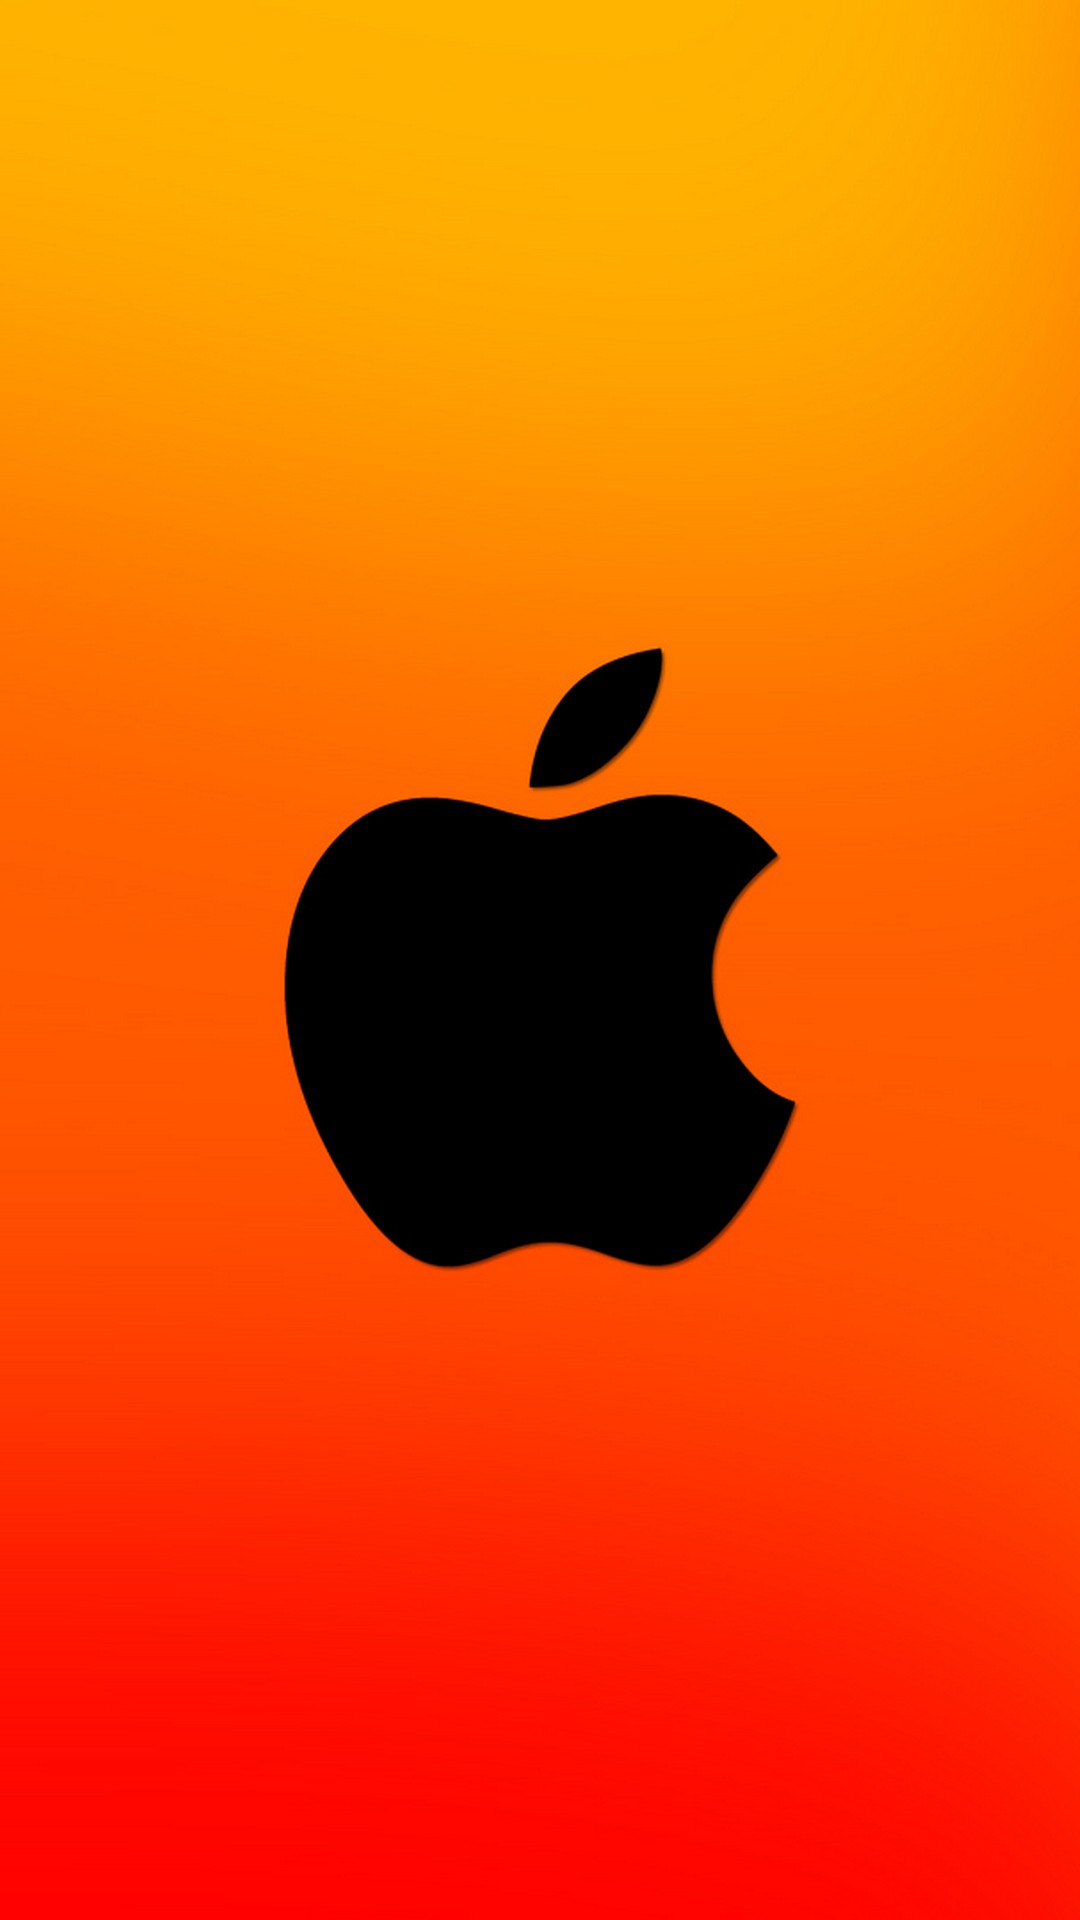 iphone wallpapers full hd,orange,red,fruit,yellow,logo